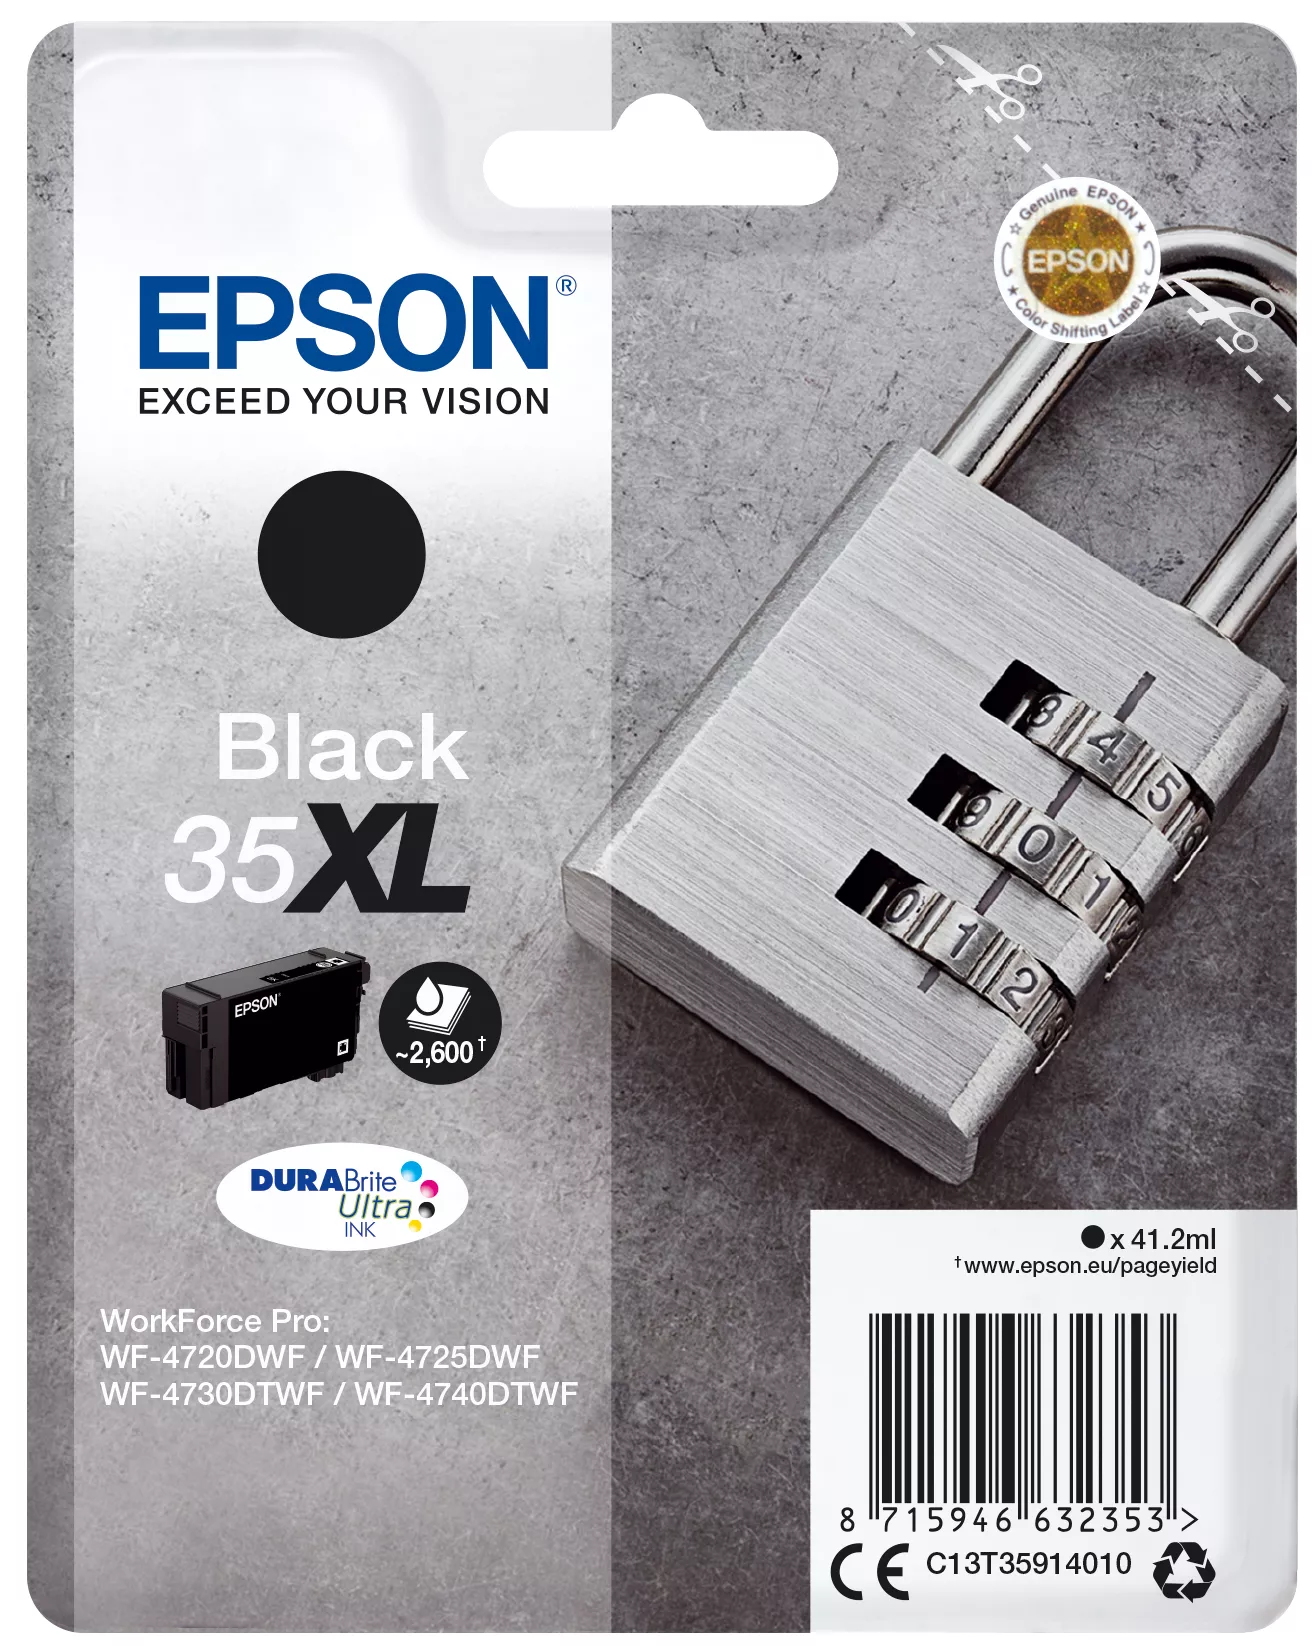 Vente Epson Padlock Singlepack Black 35XL DURABrite Ultra Ink au meilleur prix